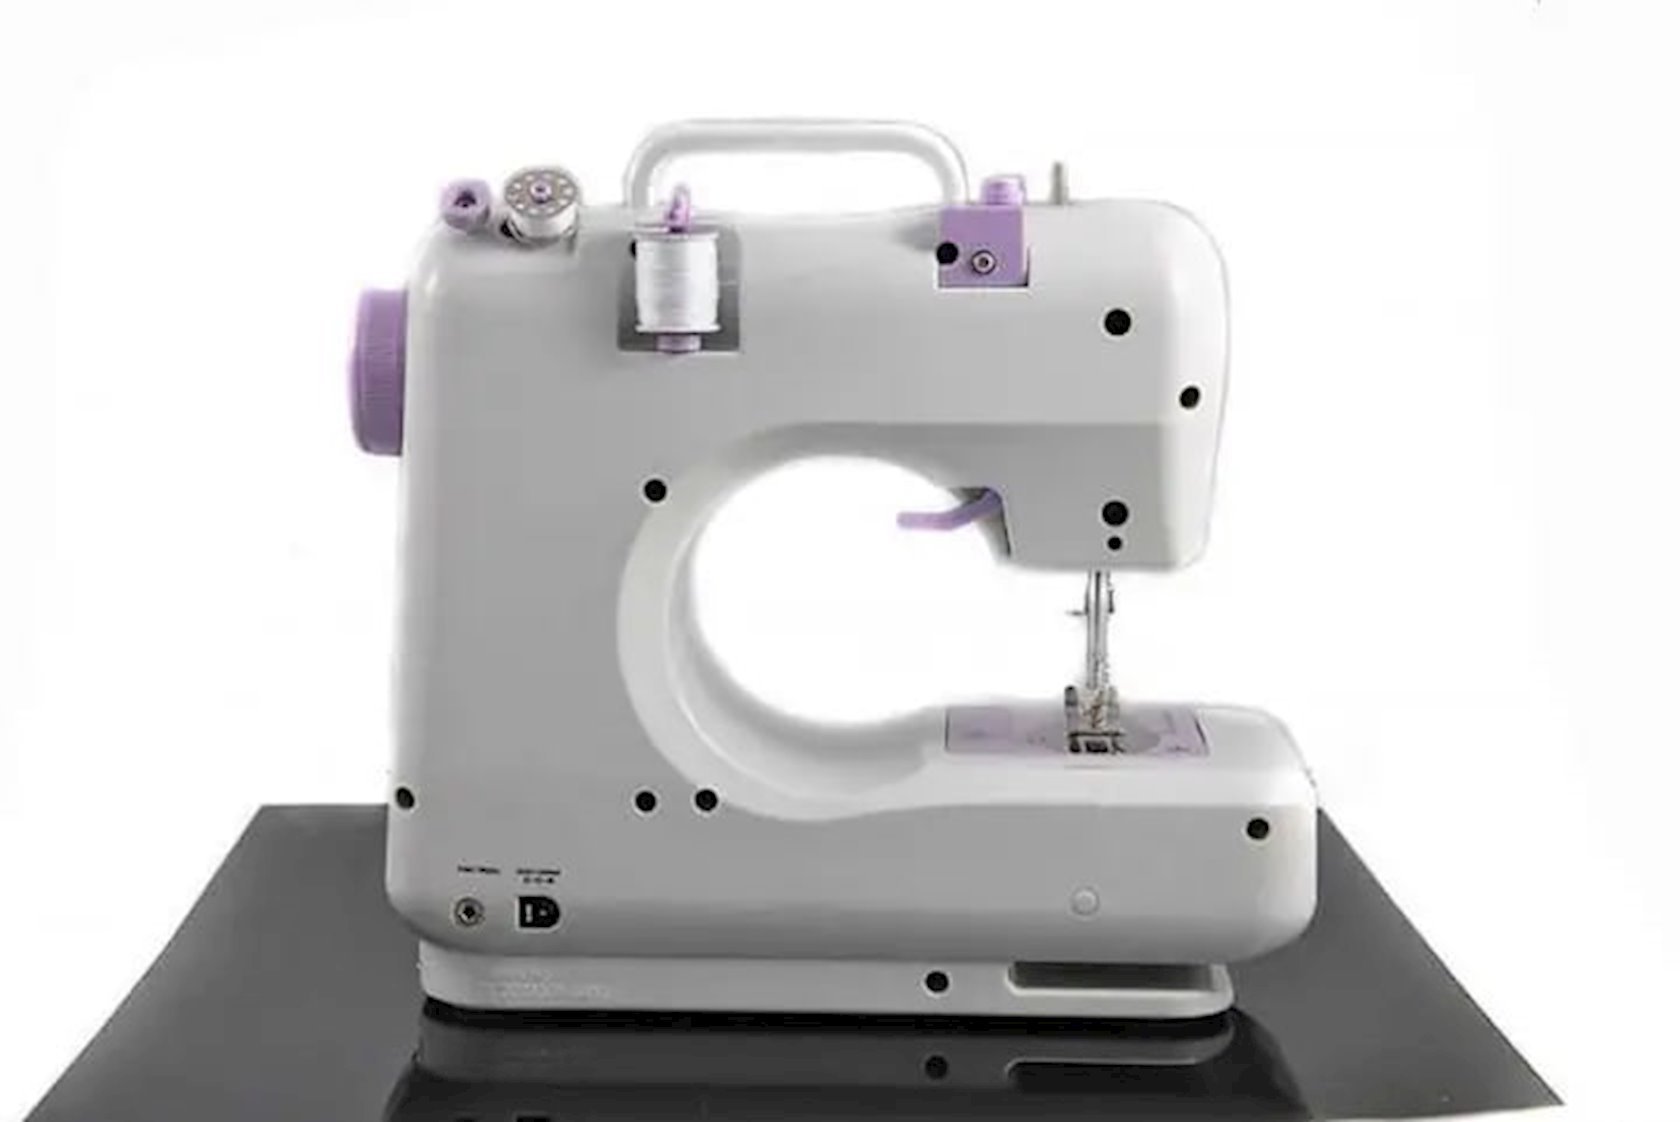  машина с оверлоком Digital Sewing Machine FHSM-505A Pro .